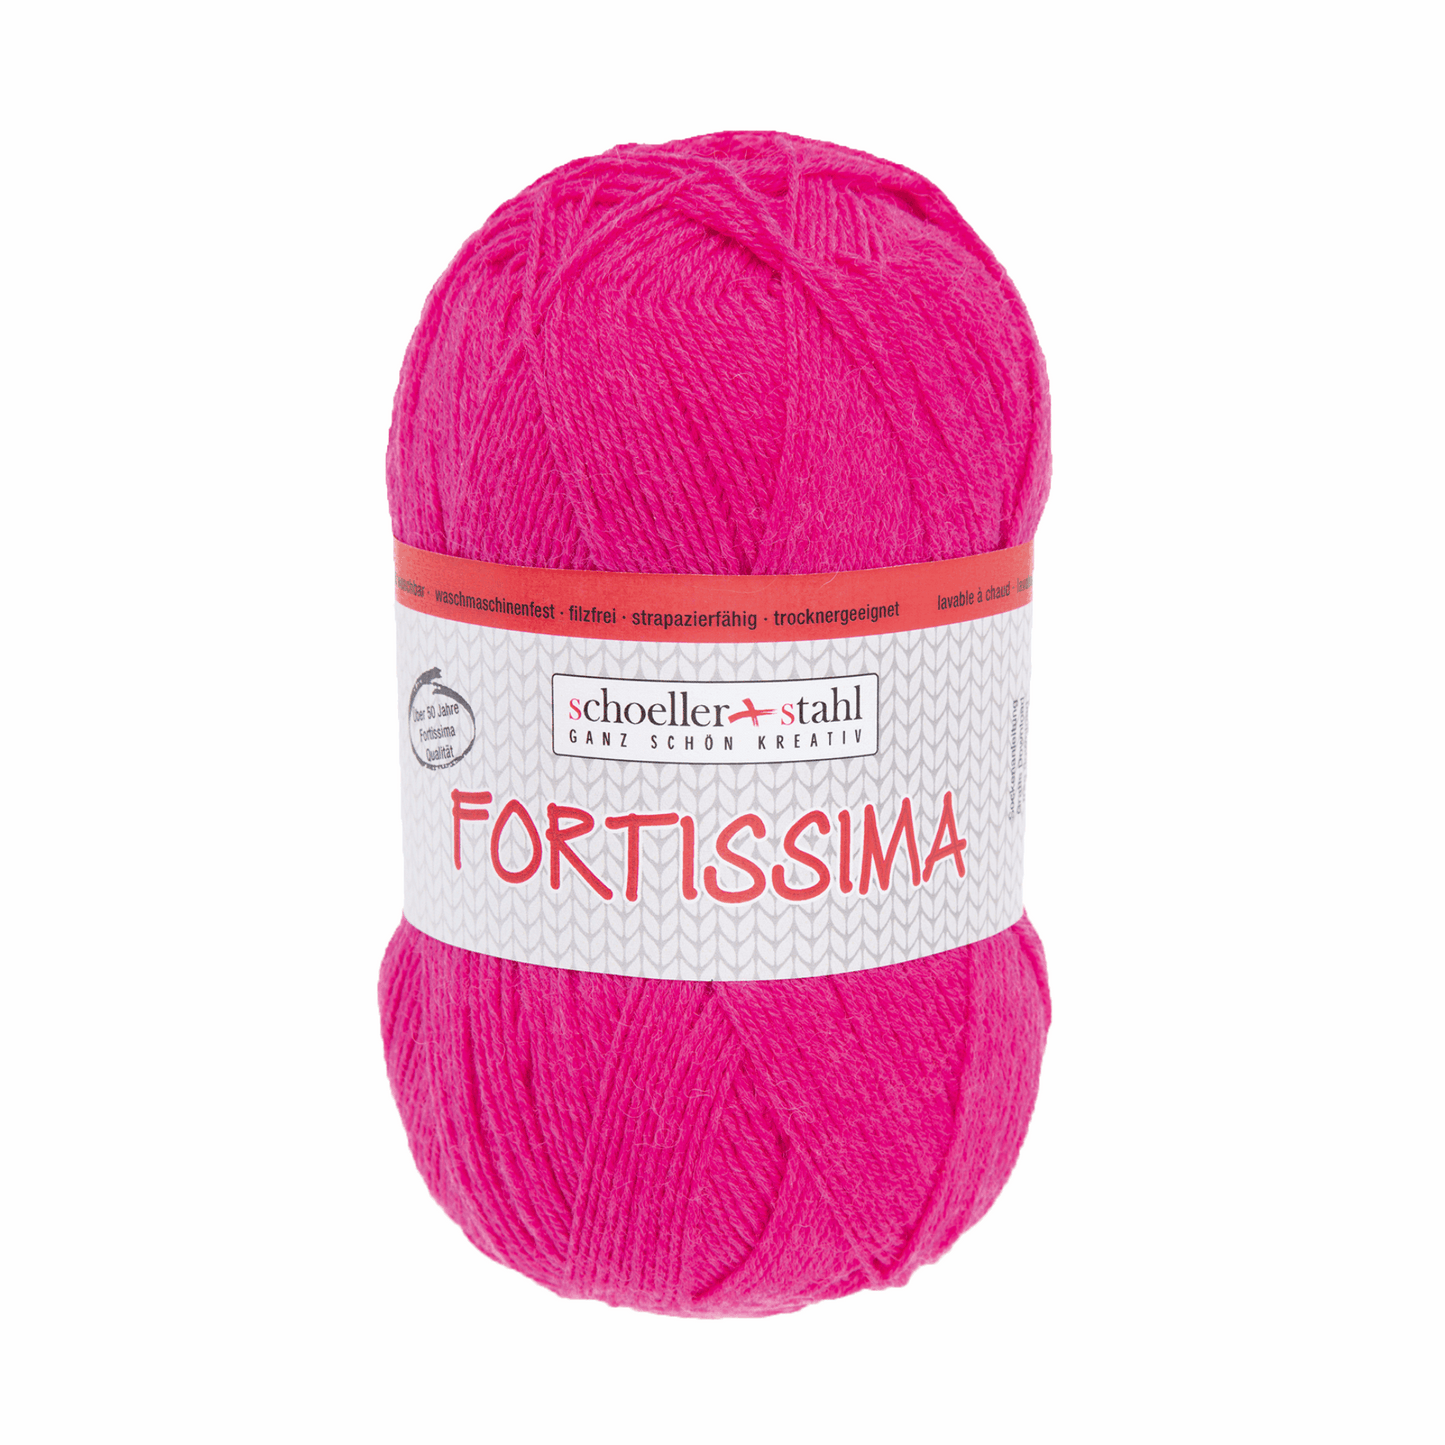 Fortissima socka 100, 90038, Farbe 2012, fuchsie